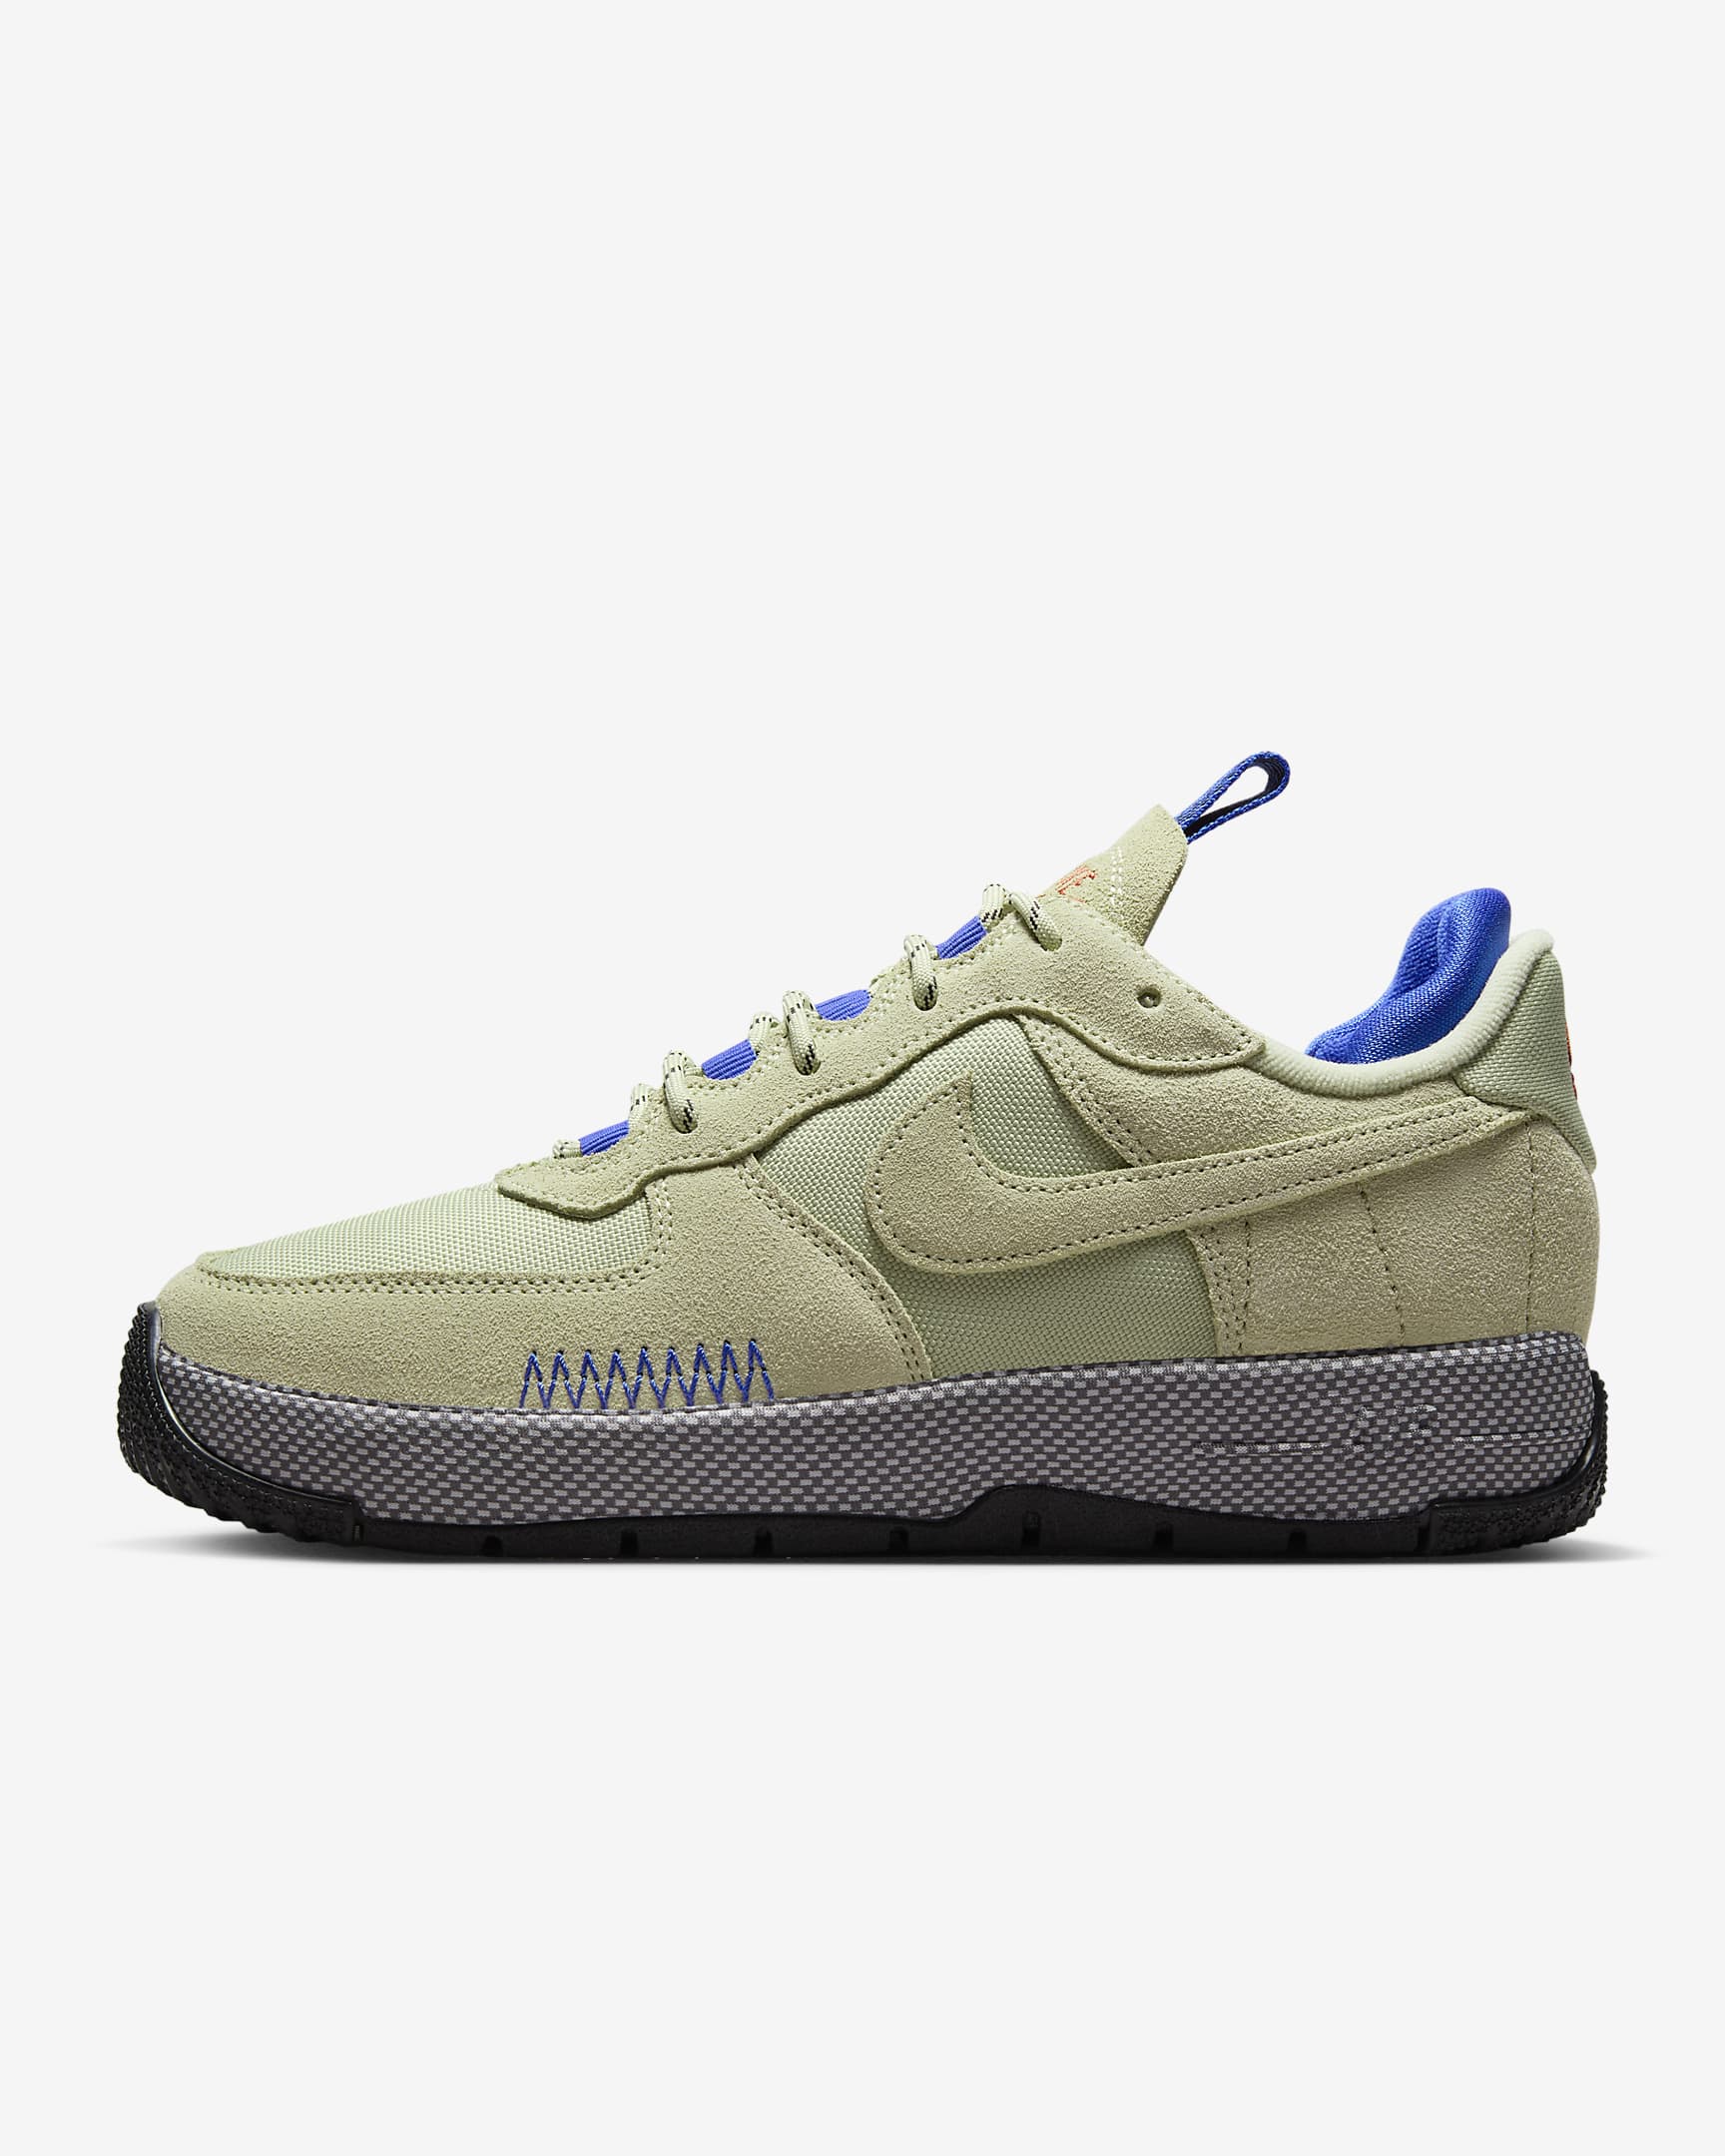 Nike Air Force 1 Wild Women's Shoes - Olive Aura/Aquarius Blue/Ashen Slate/Racer Blue